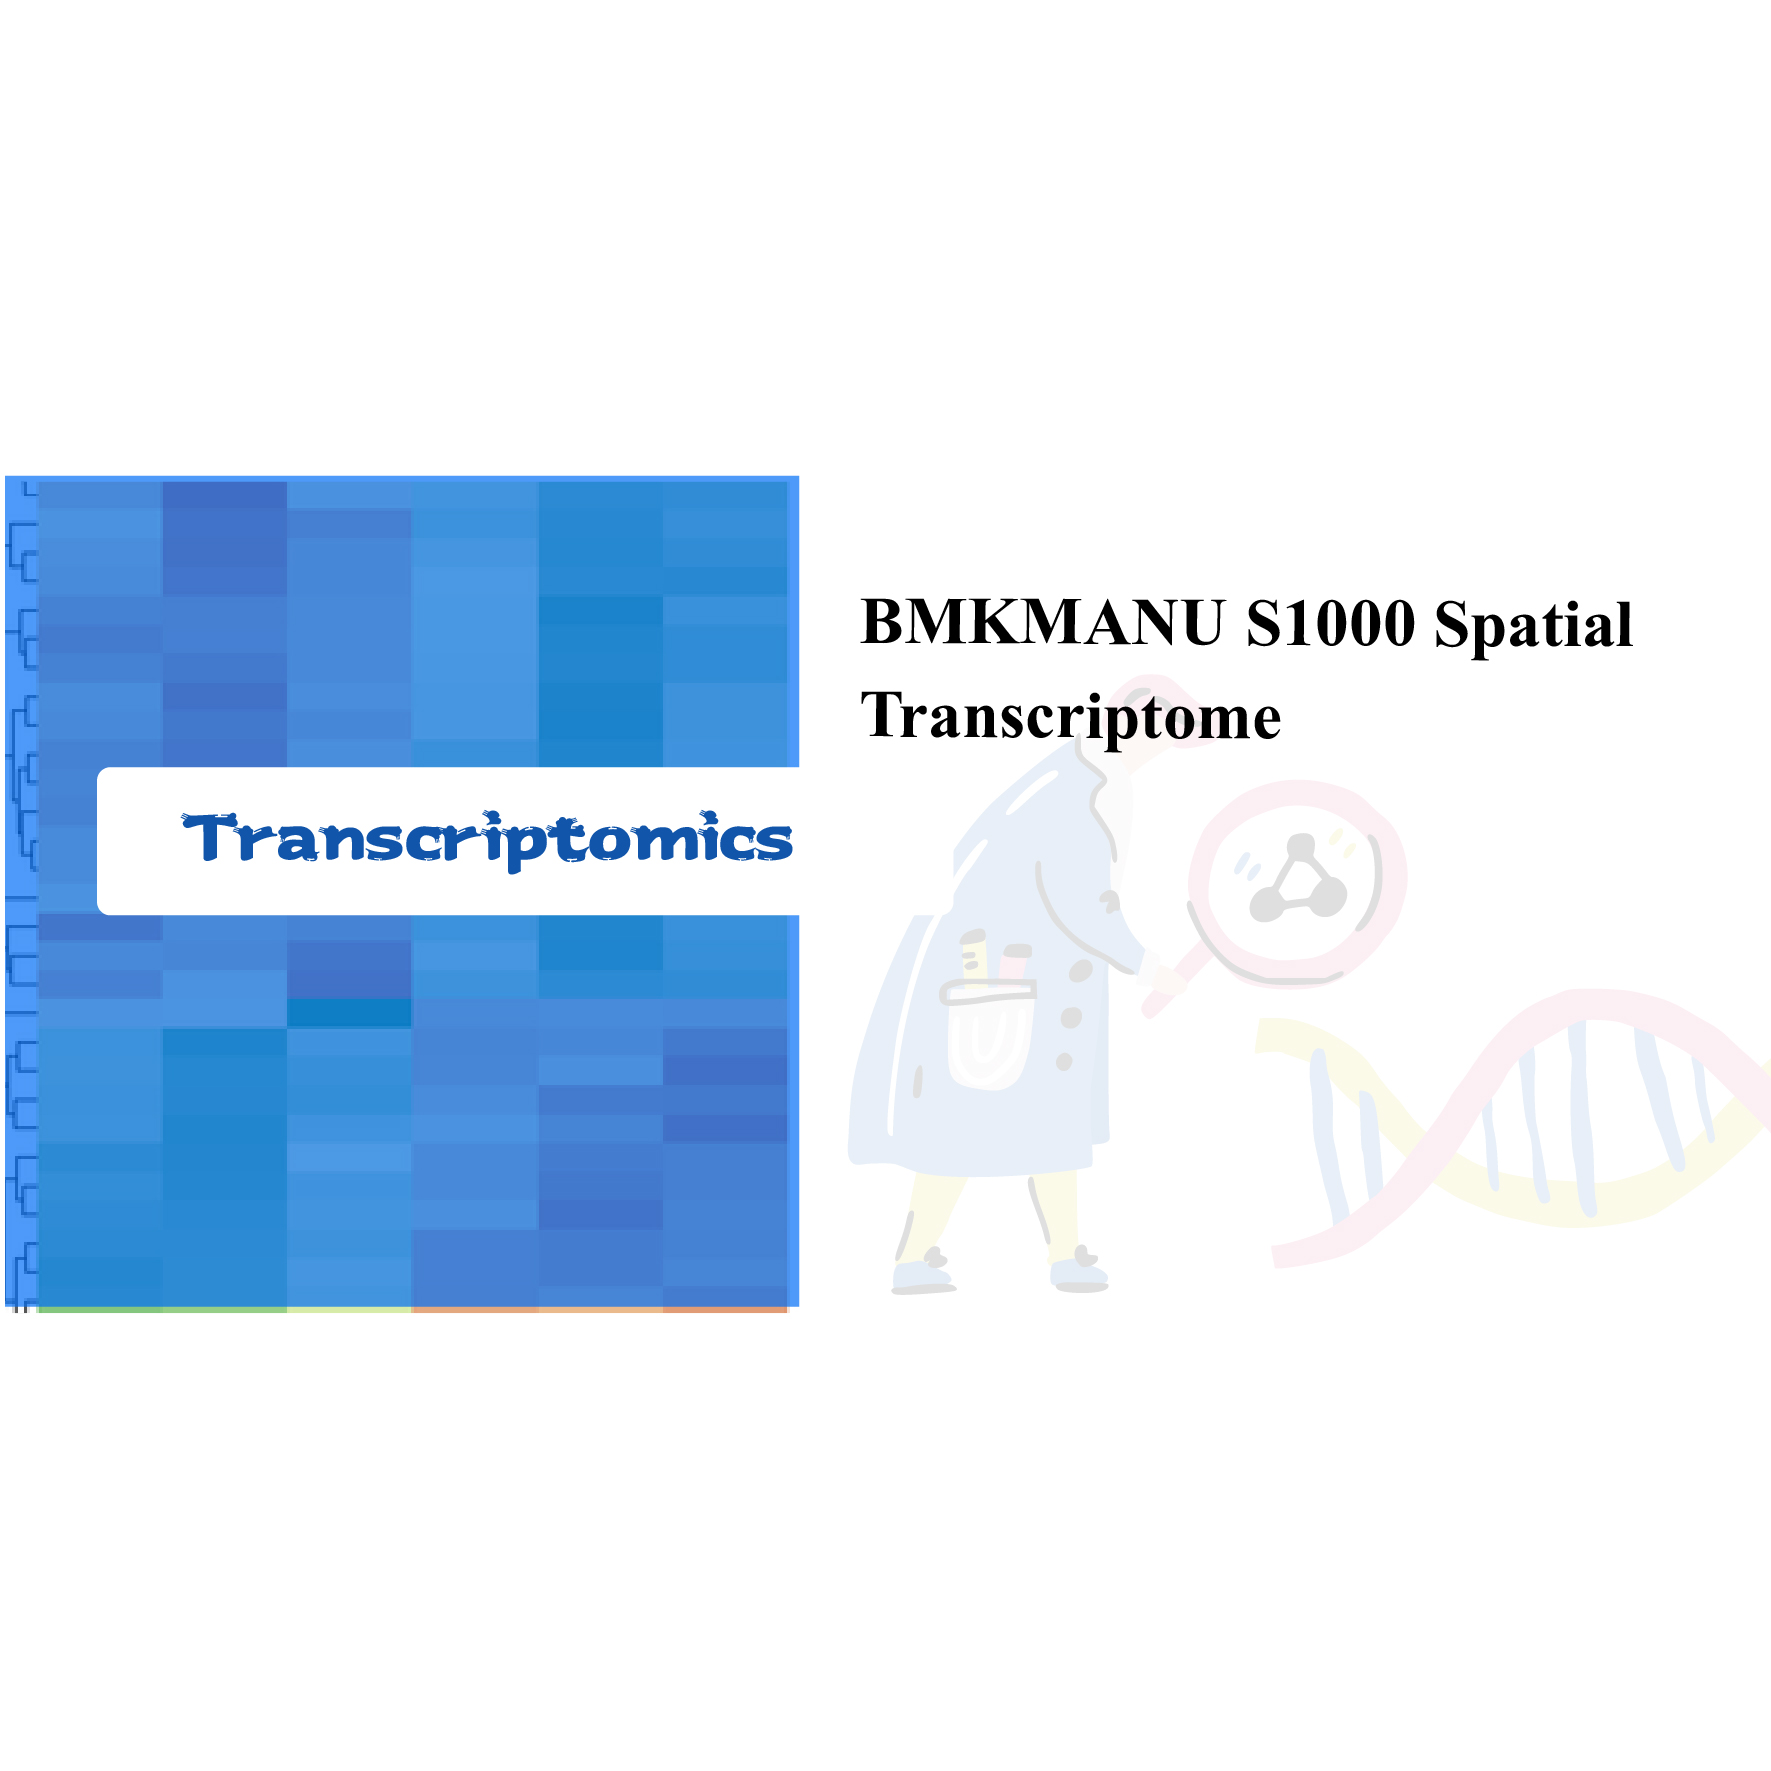 BMKMANU S1000 Spatial Transcriptome Featured Image